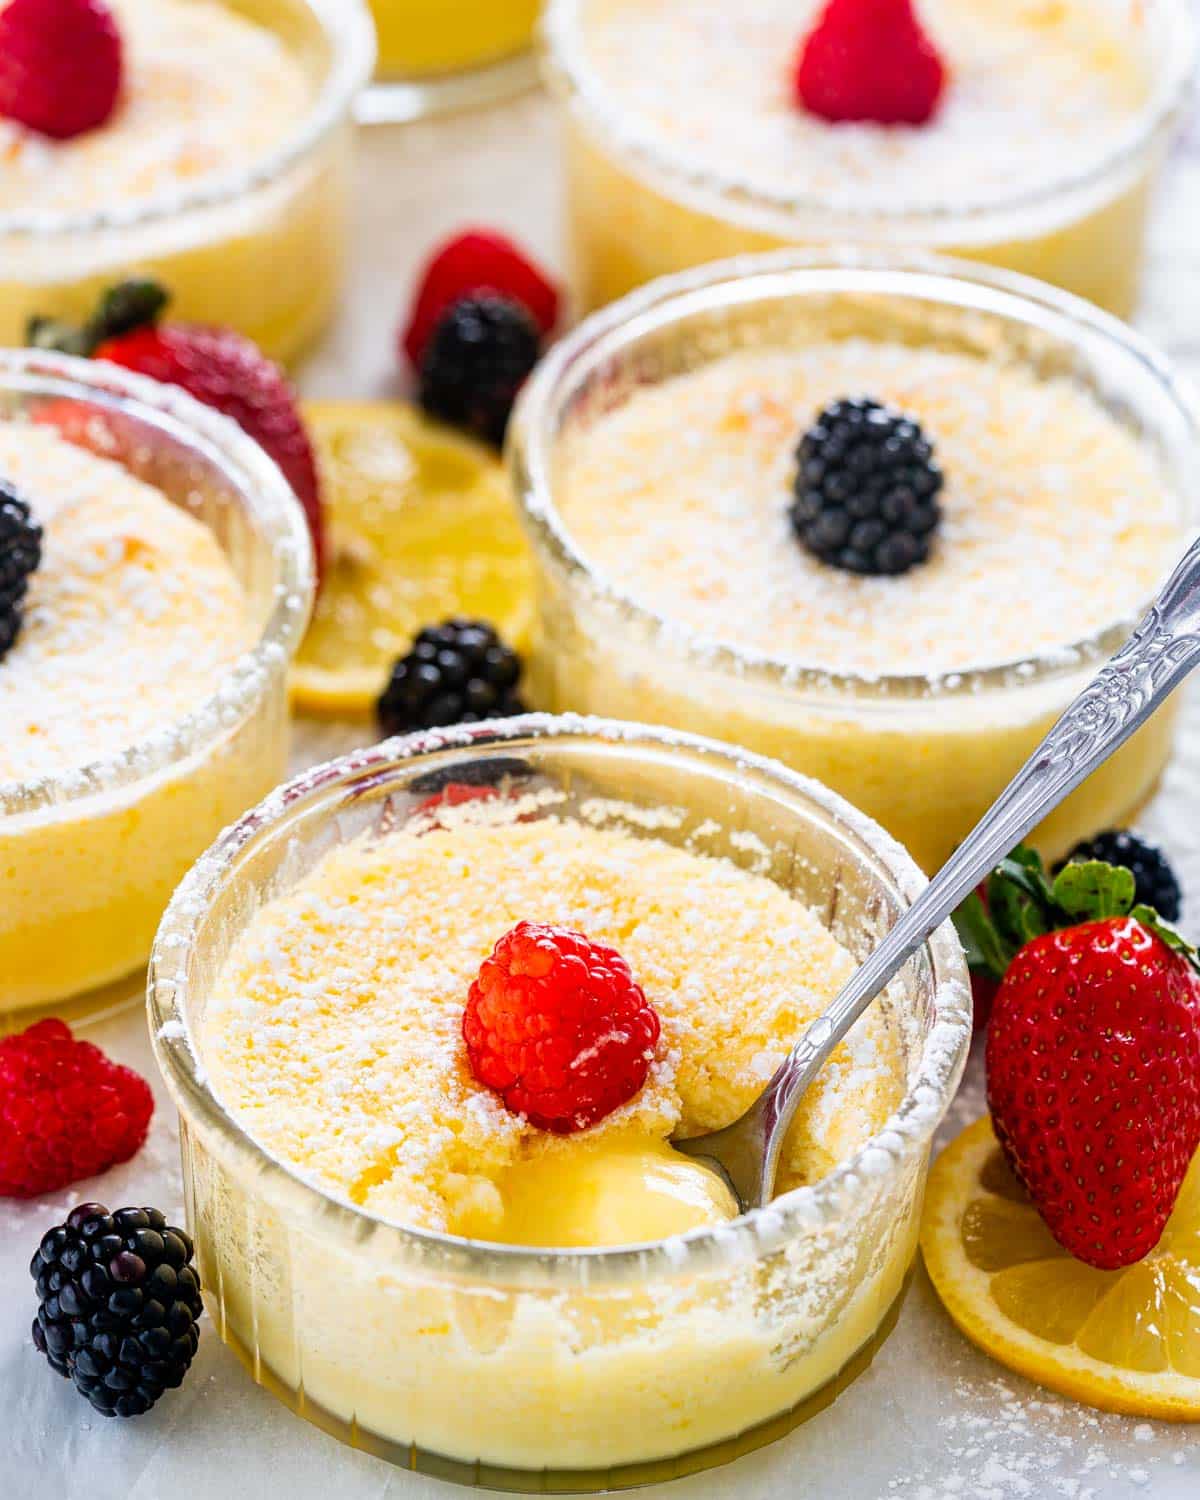 ramekins of lemon pudding cakes garnished with berries.